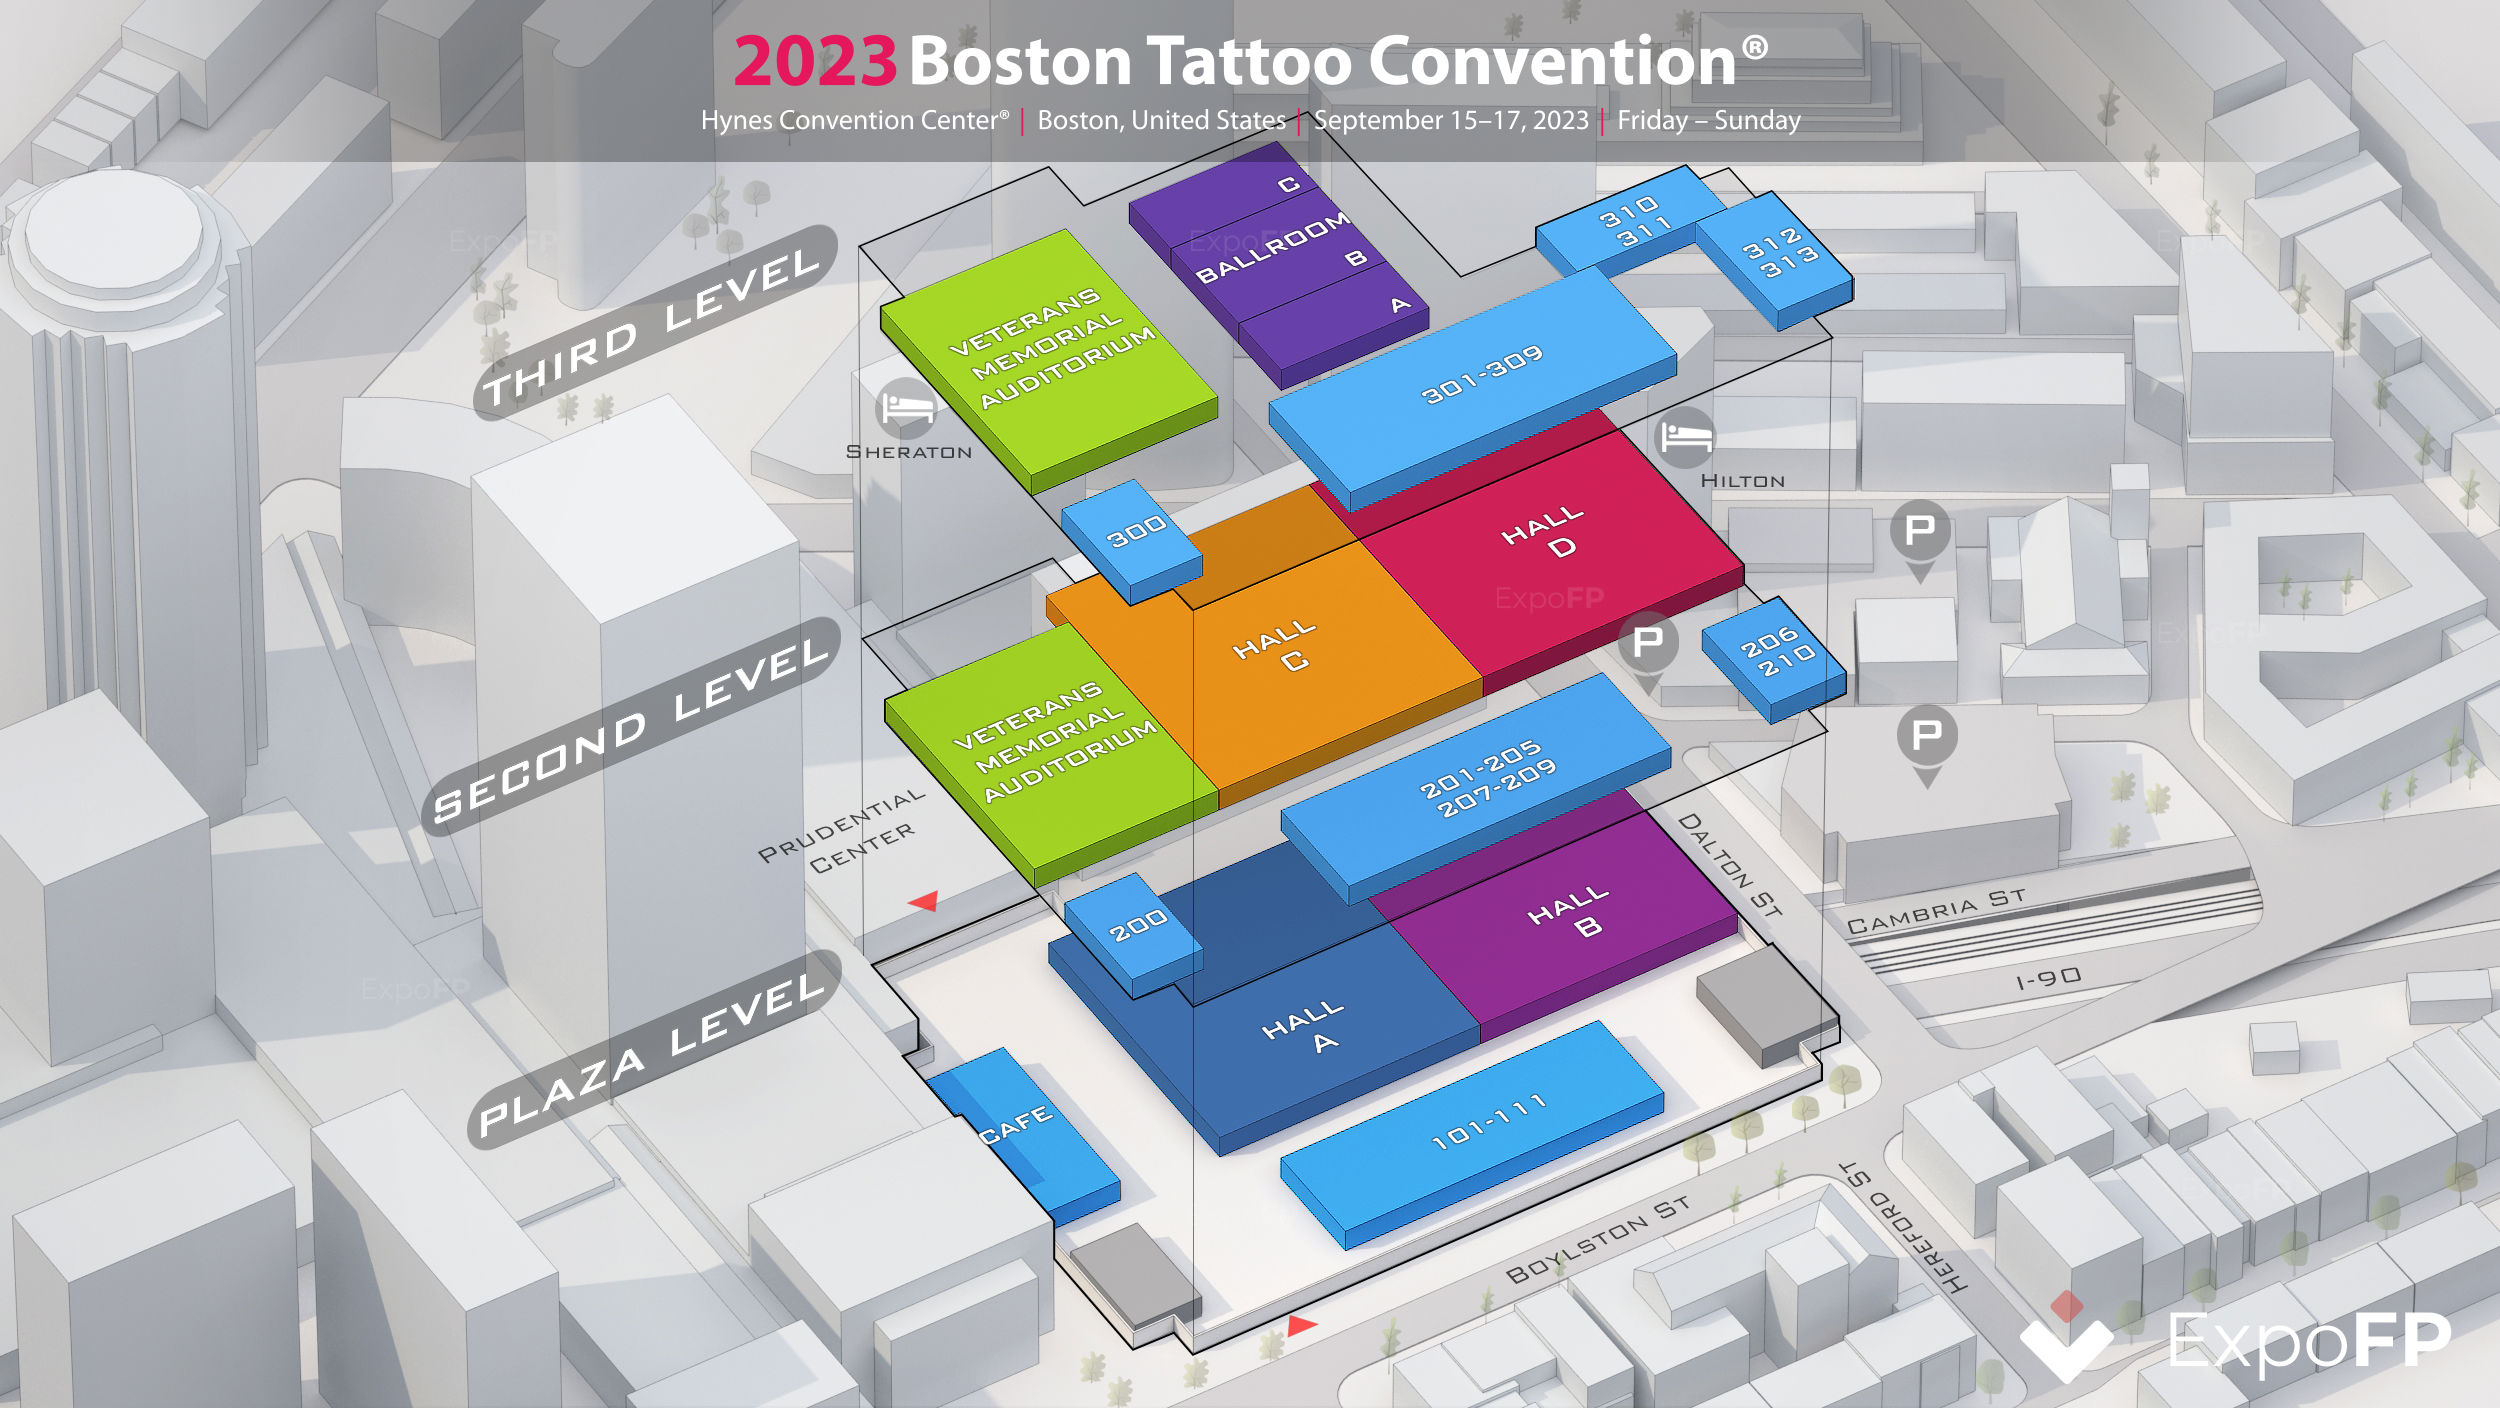 Boston Tattoo Convention 2023 in Hynes Convention Center